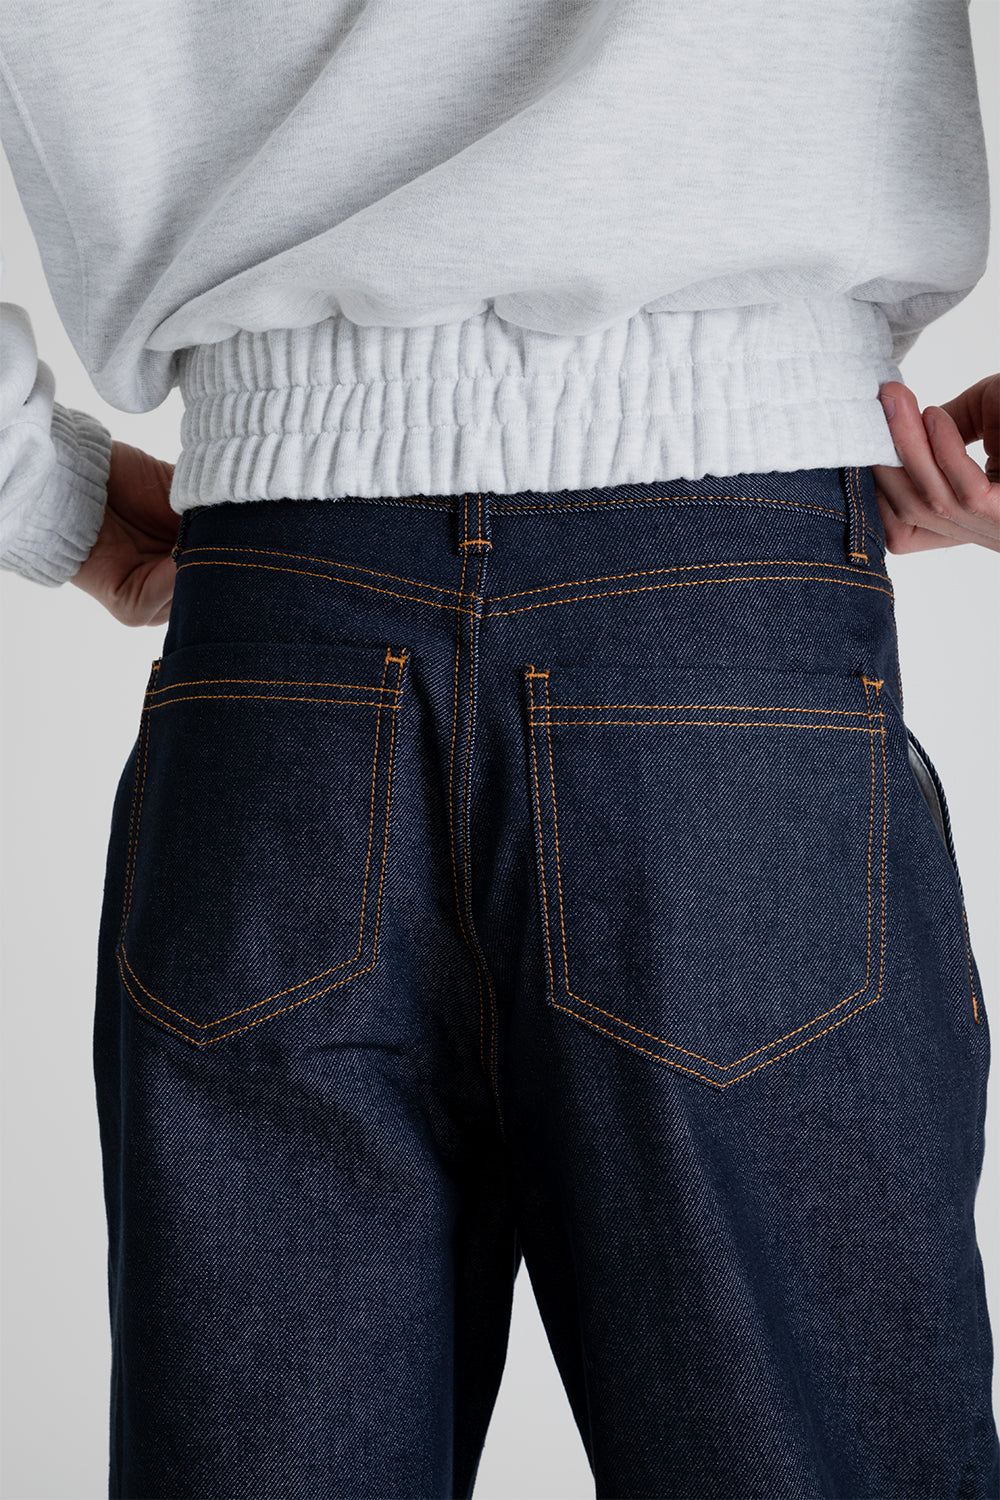 Frizmworks Denim Comfort Two Tuck Pants in Indigo